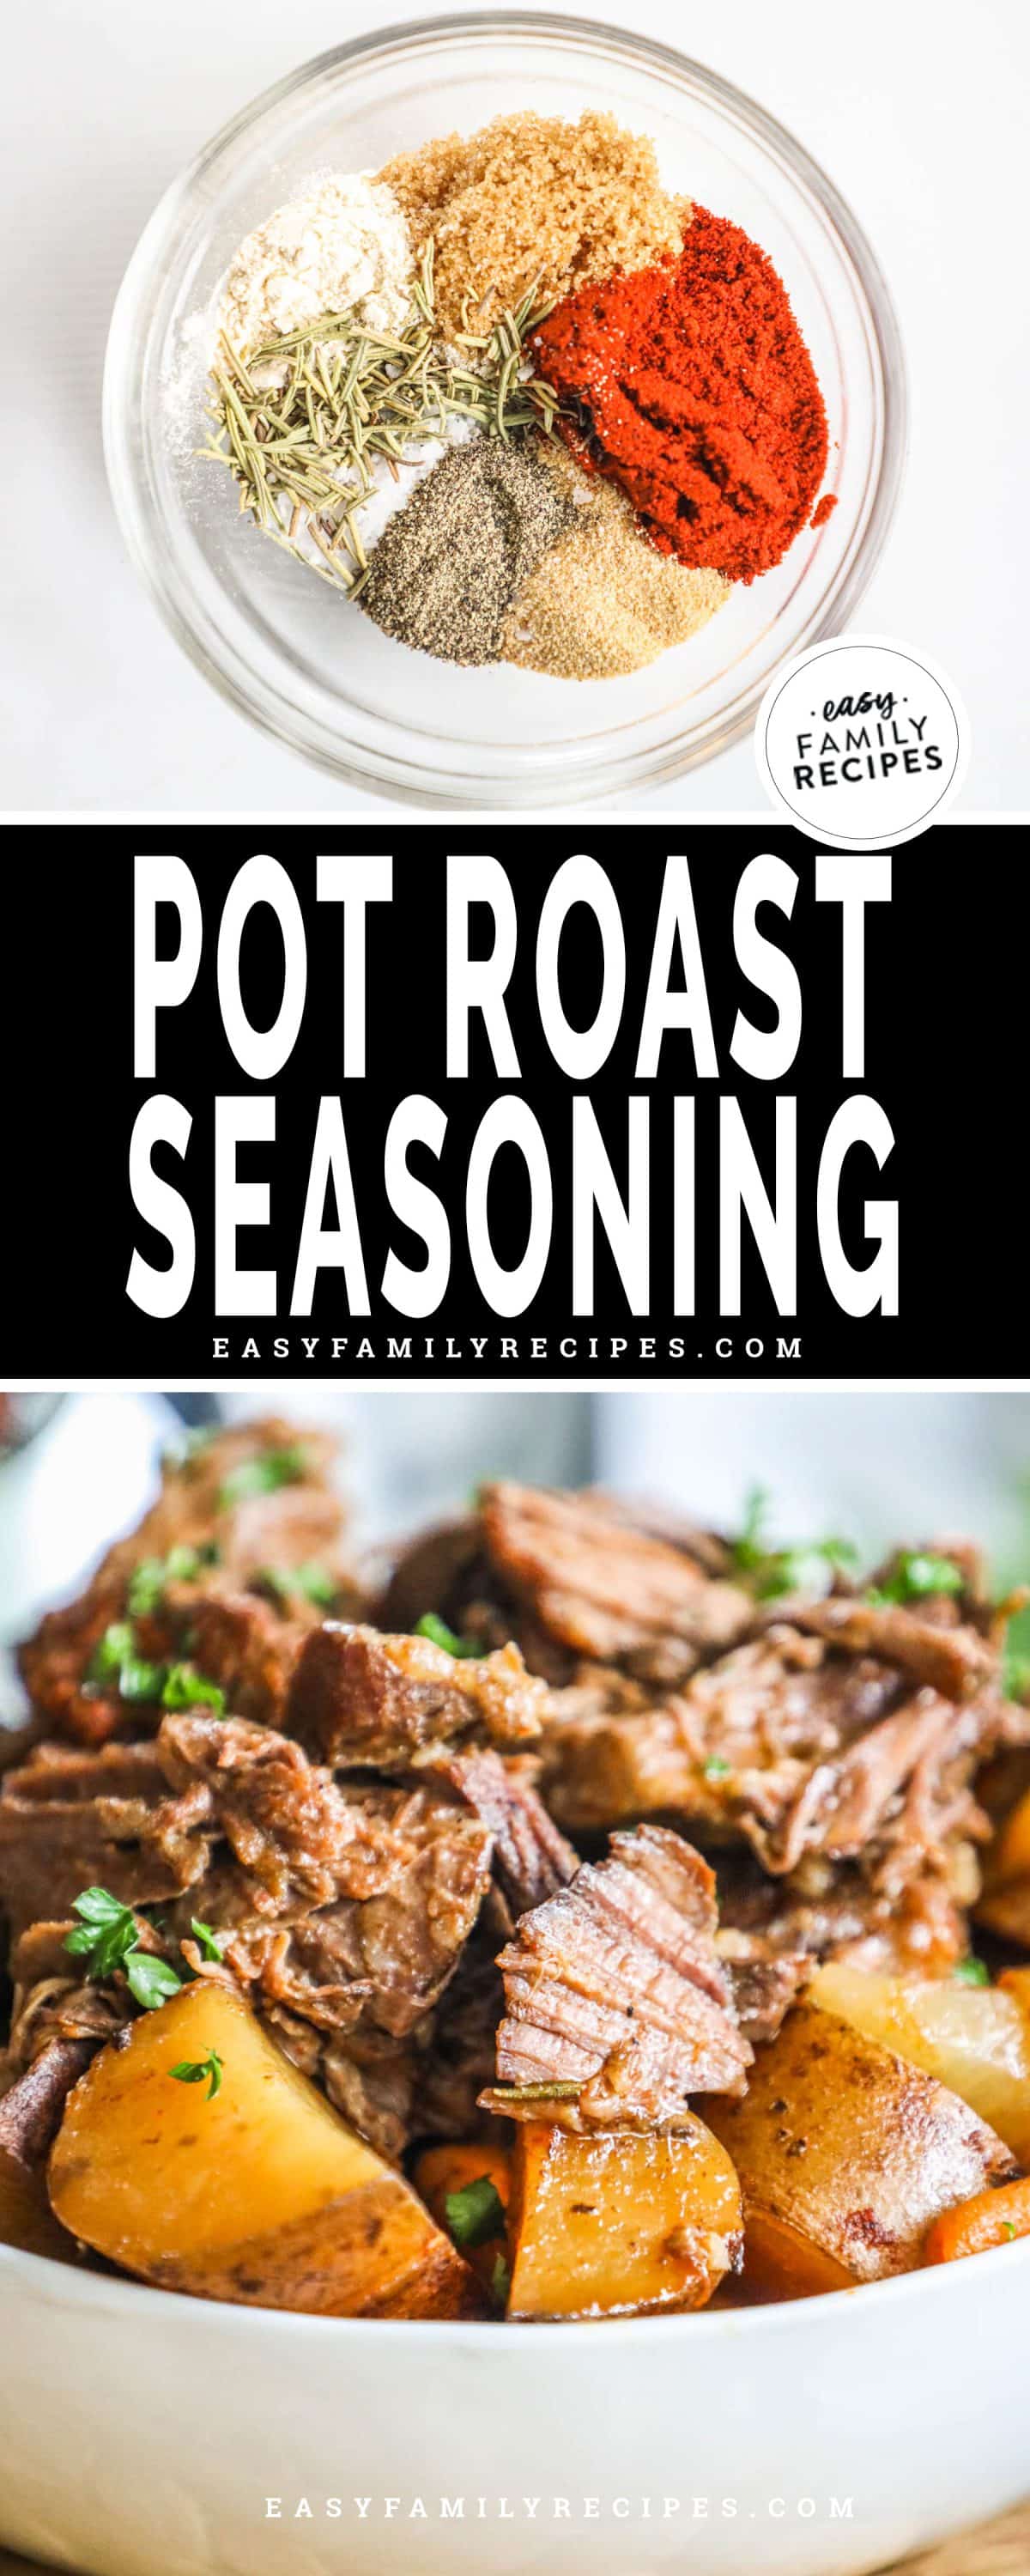 Pot Roast Seasoning on a beef pot roast